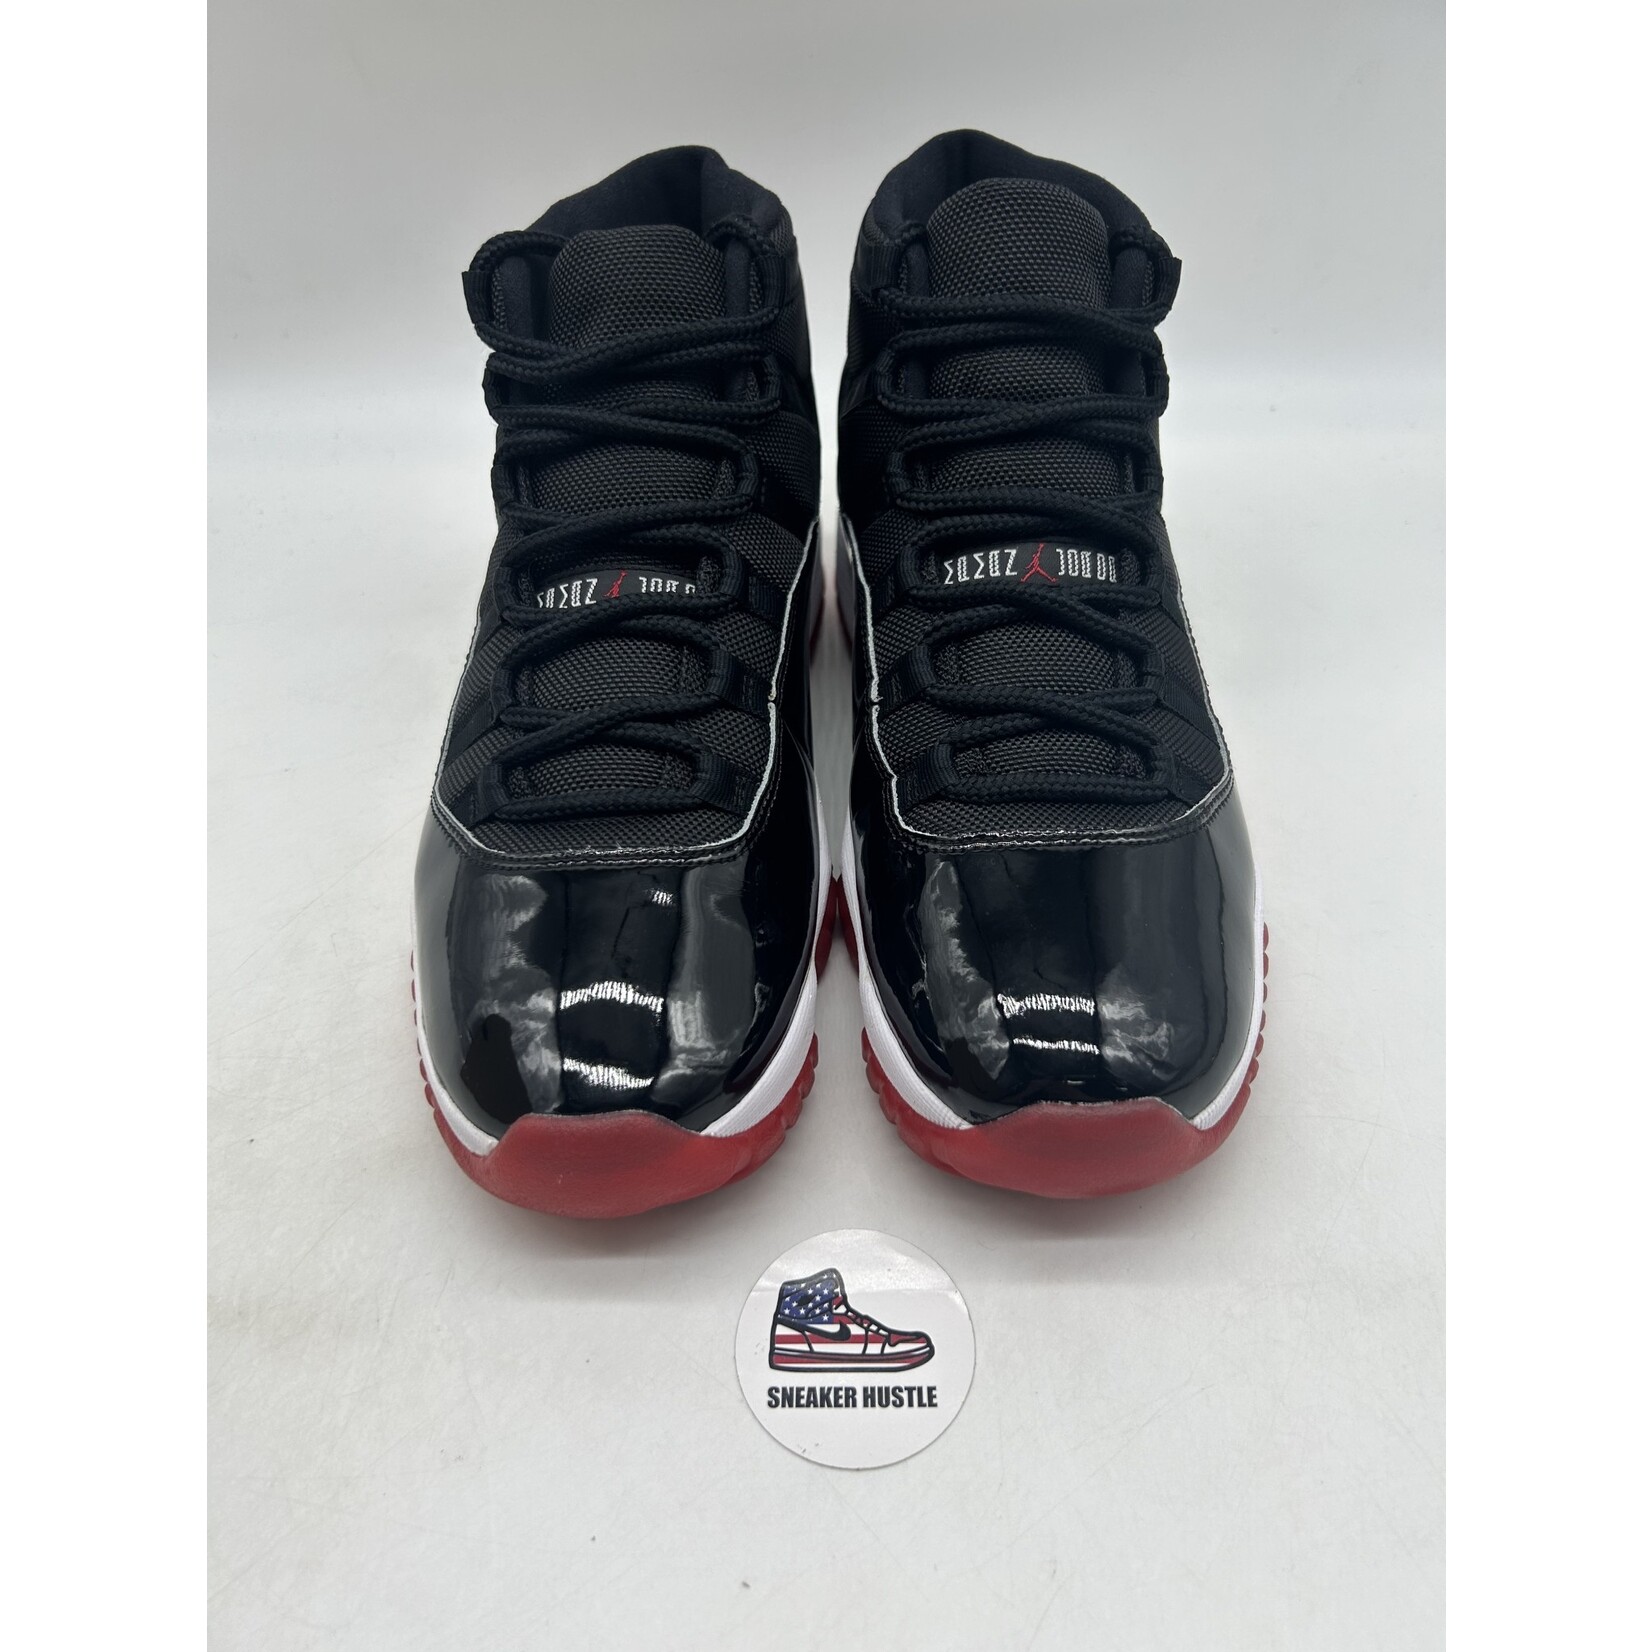 Air Jordan Jordan 11 Retro Playoffs Bred (2019)